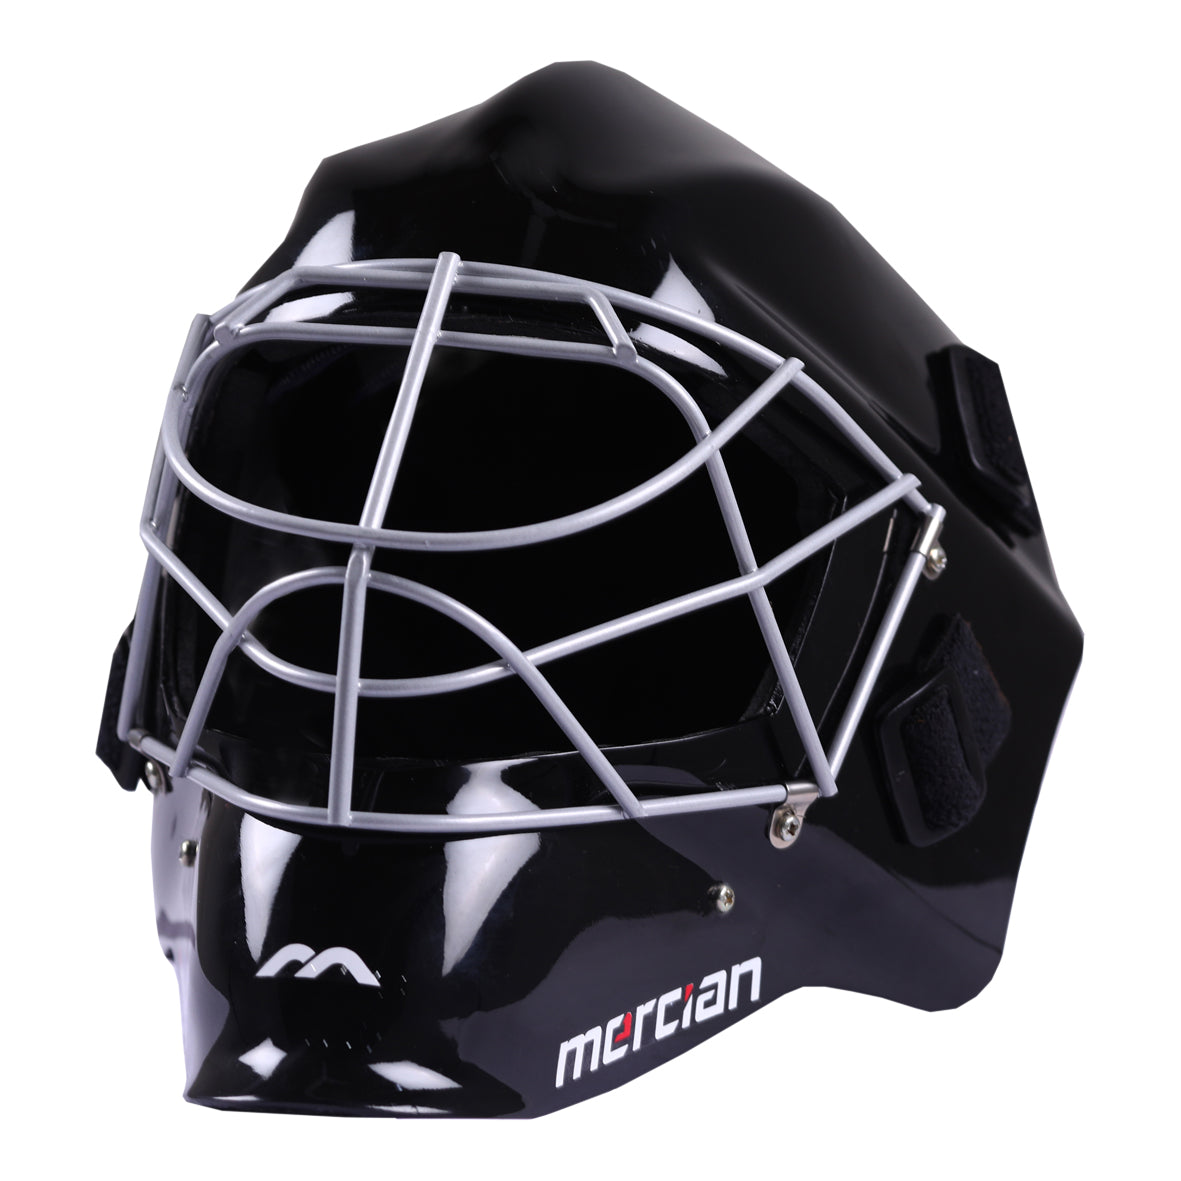 Goalie Face & Amp,Head Protection Goalkeeper Helmet Field Hockey